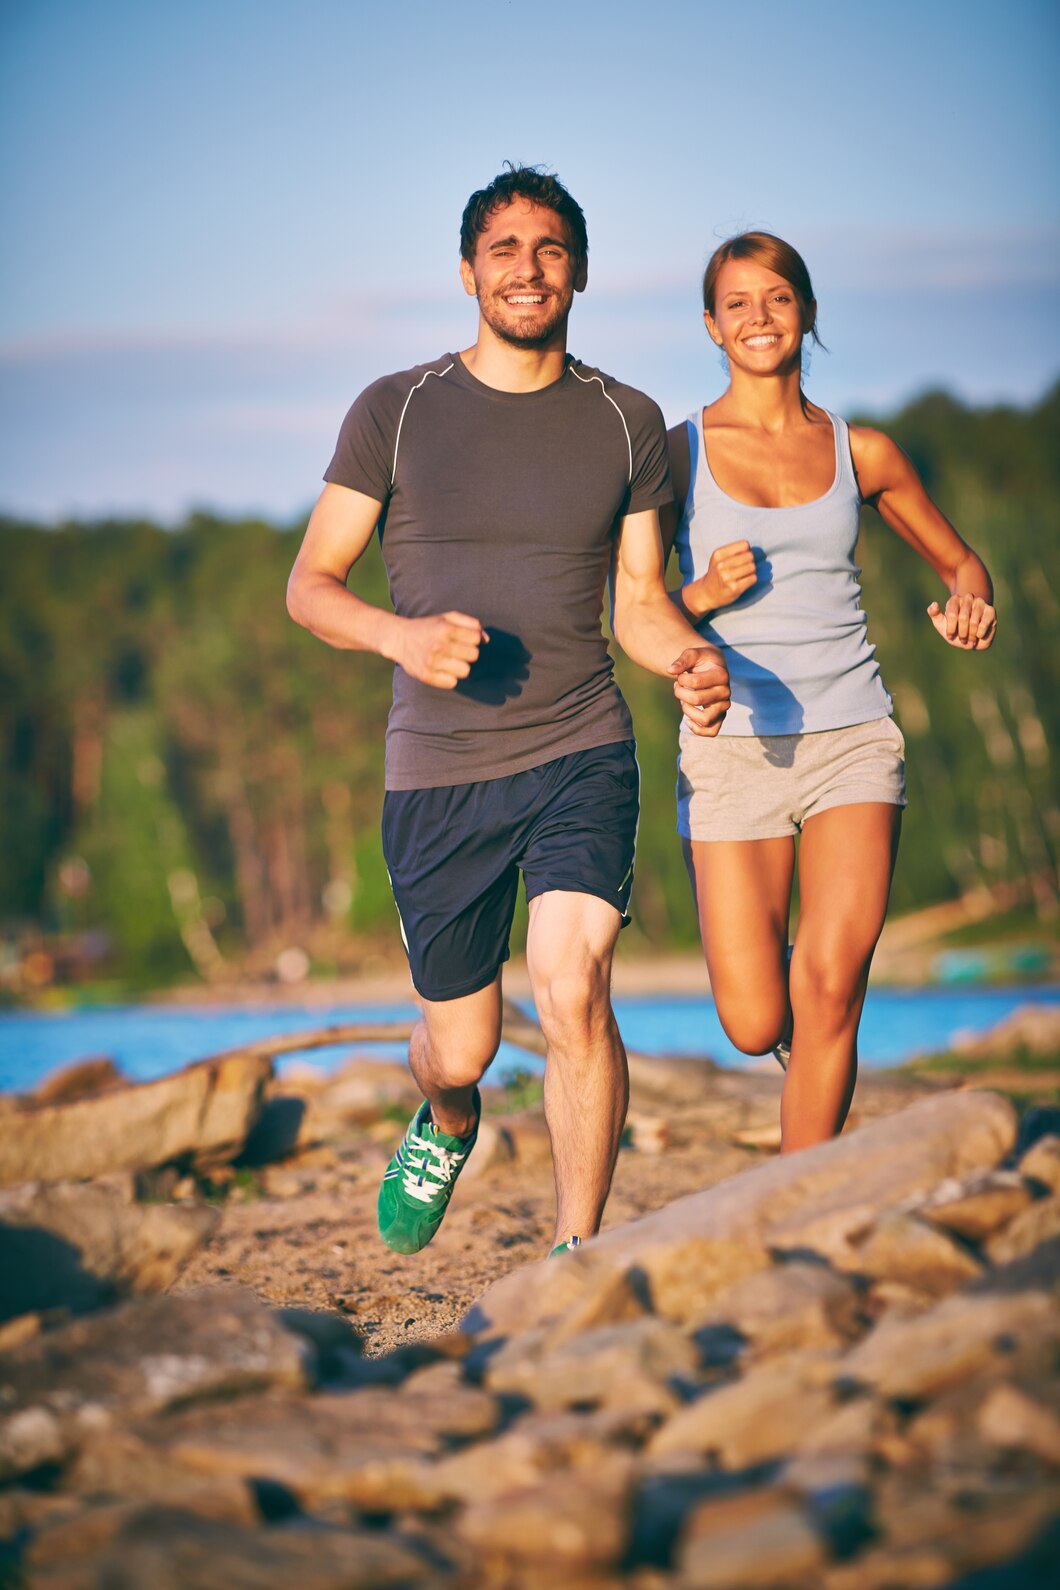 Young couple joyfully running outdoors - Vitamin B Complex